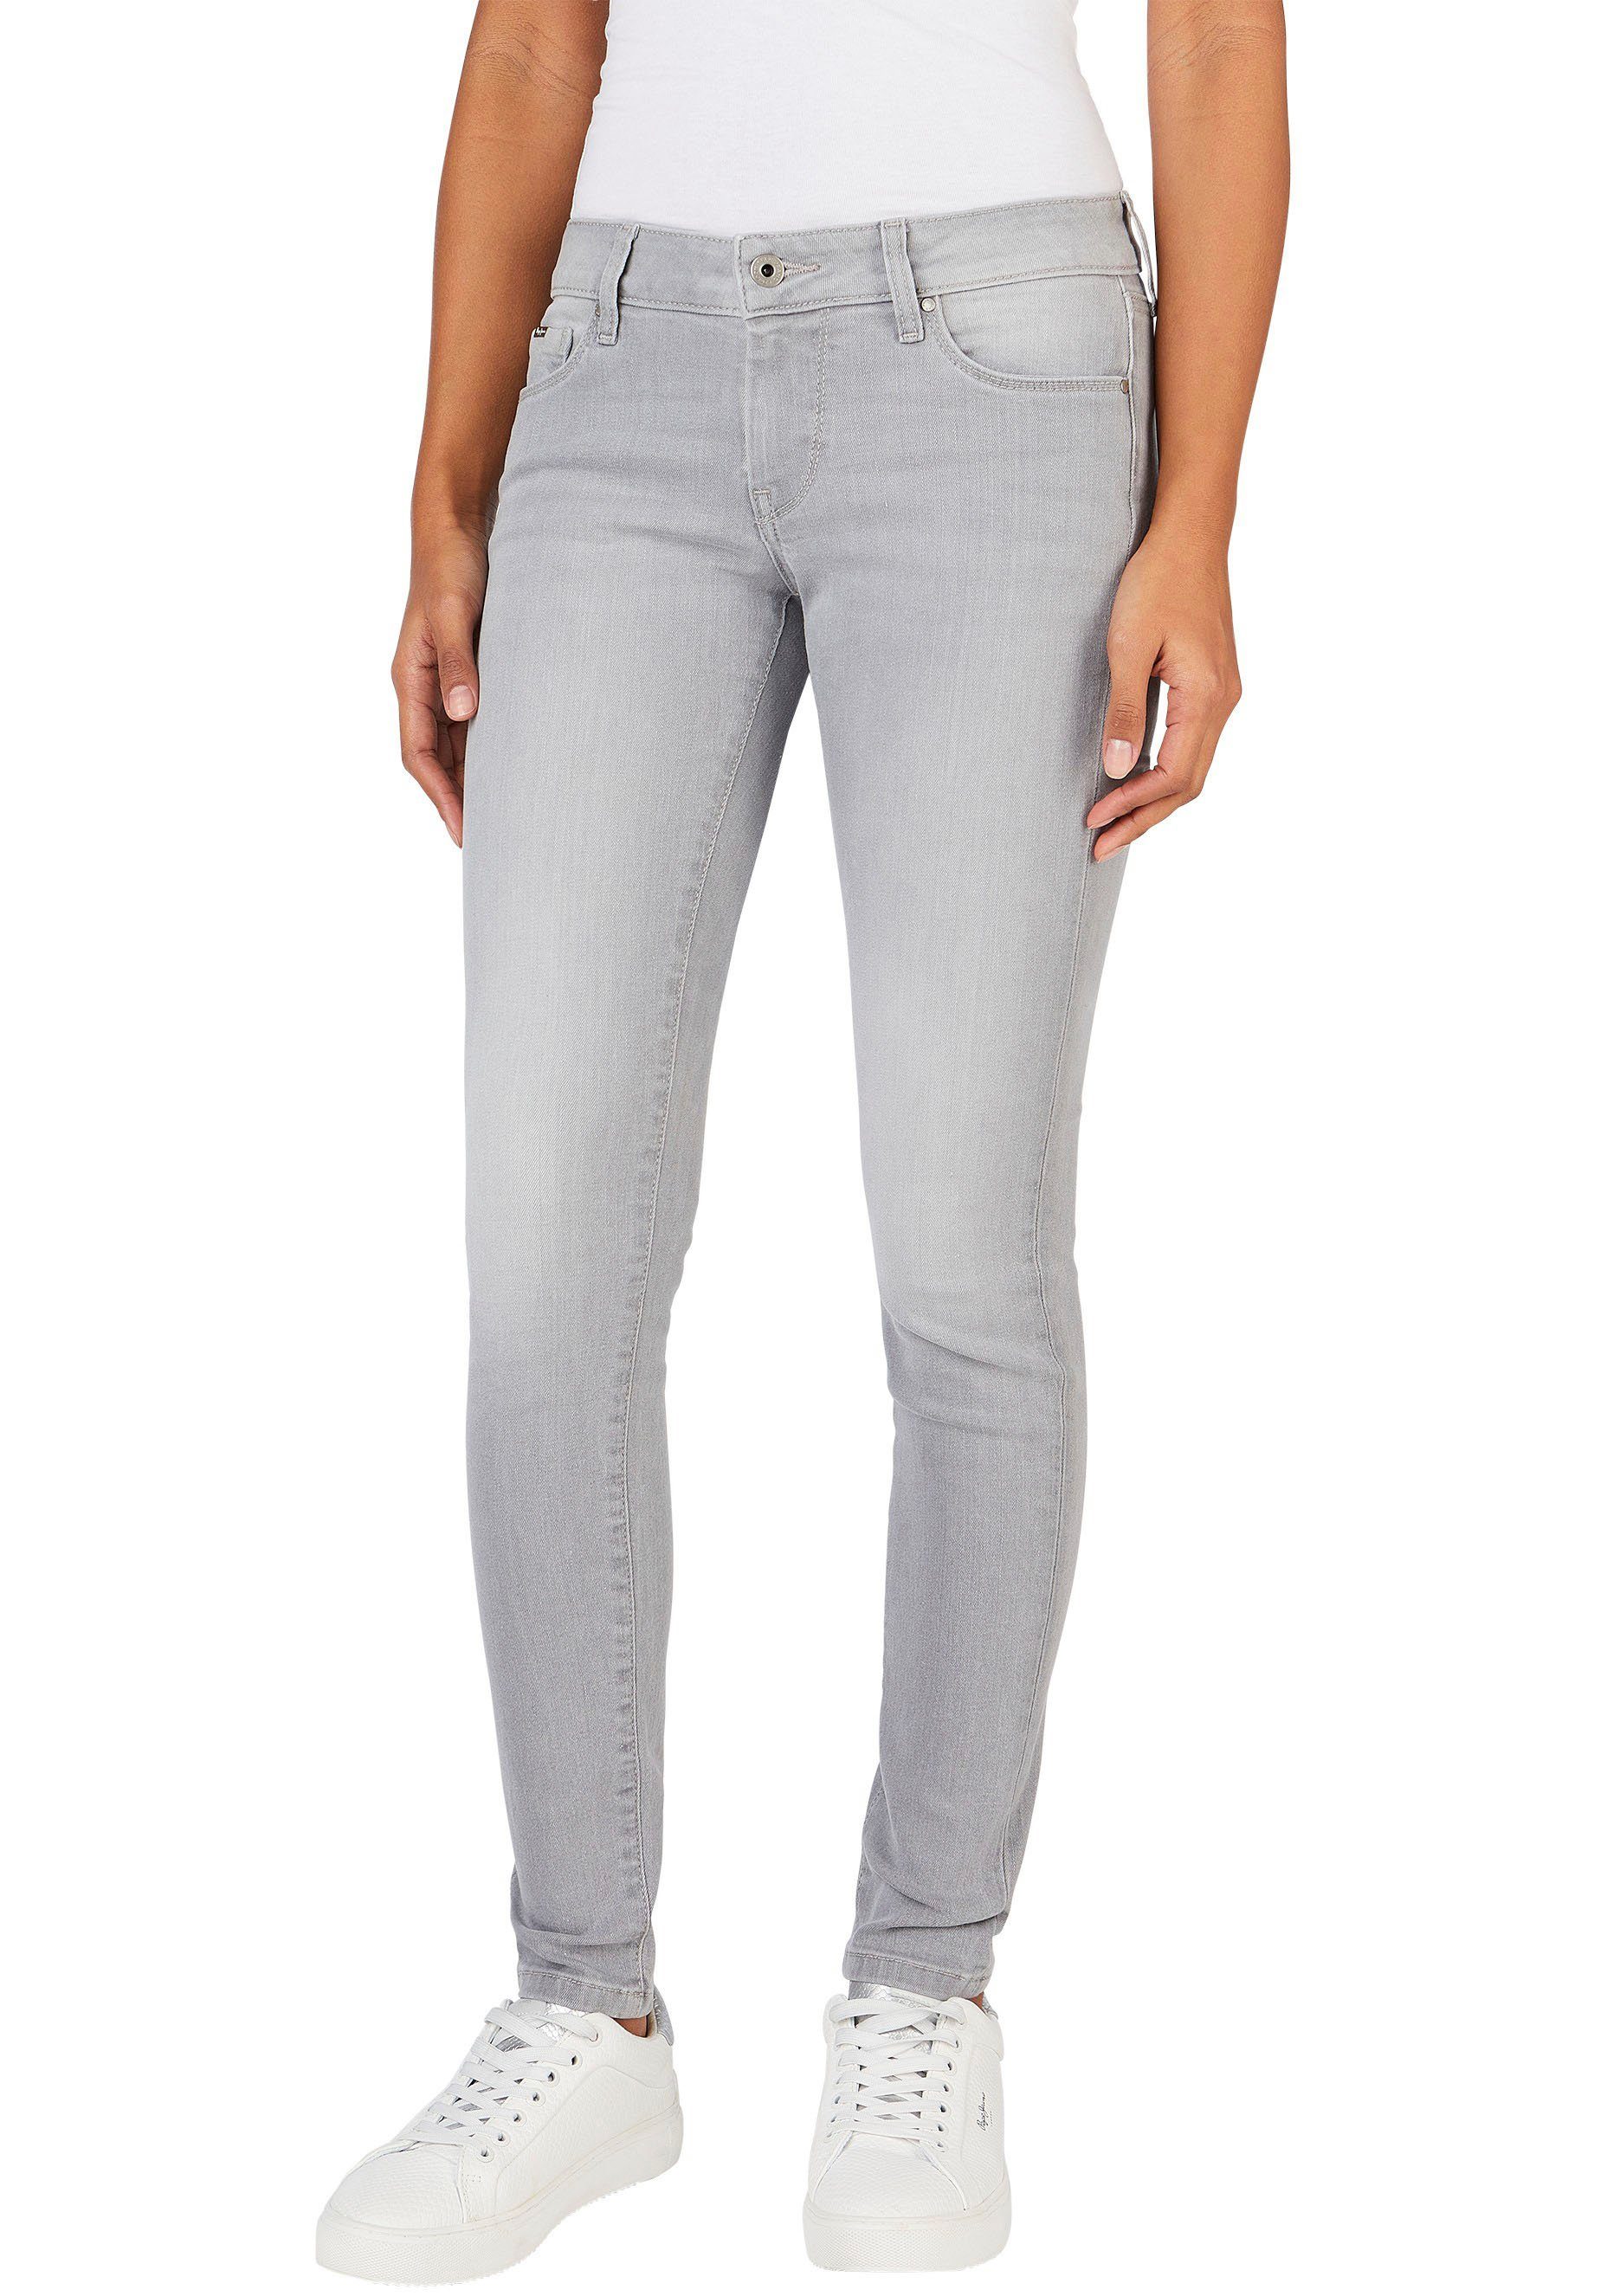 Pepe Jeans Skinny-fit-Jeans SOHO und light grey 5-Pocket-Stil Bund Stretch-Anteil mit im 1-Knopf